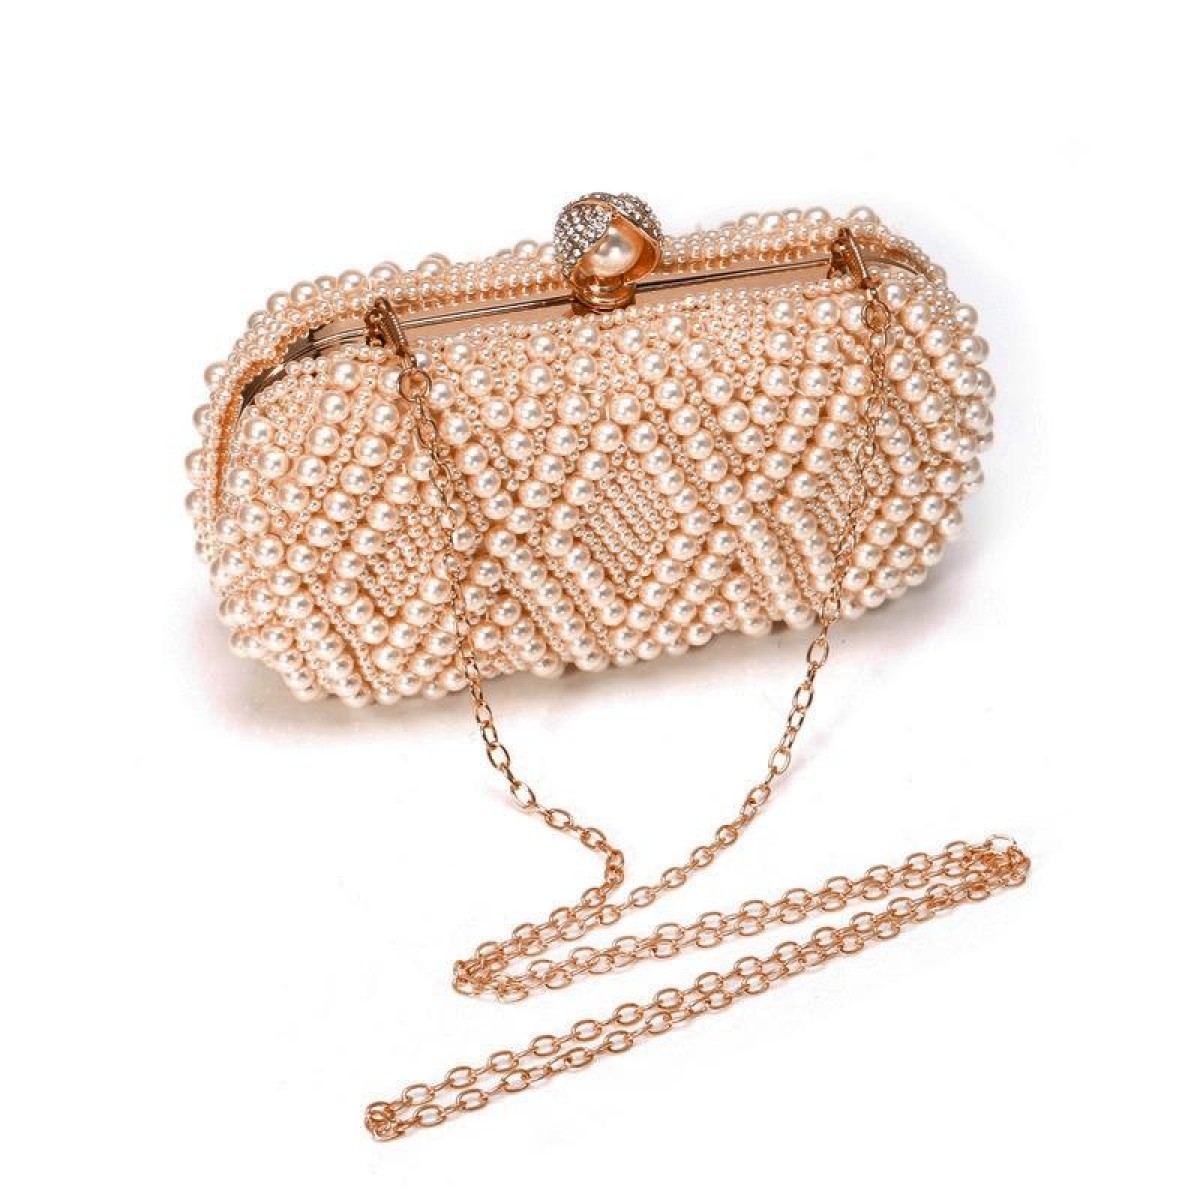 Women Fashion Banquet Party Pearl Handbag Single Shoulder Crossbody Bag (Champagne Gold)